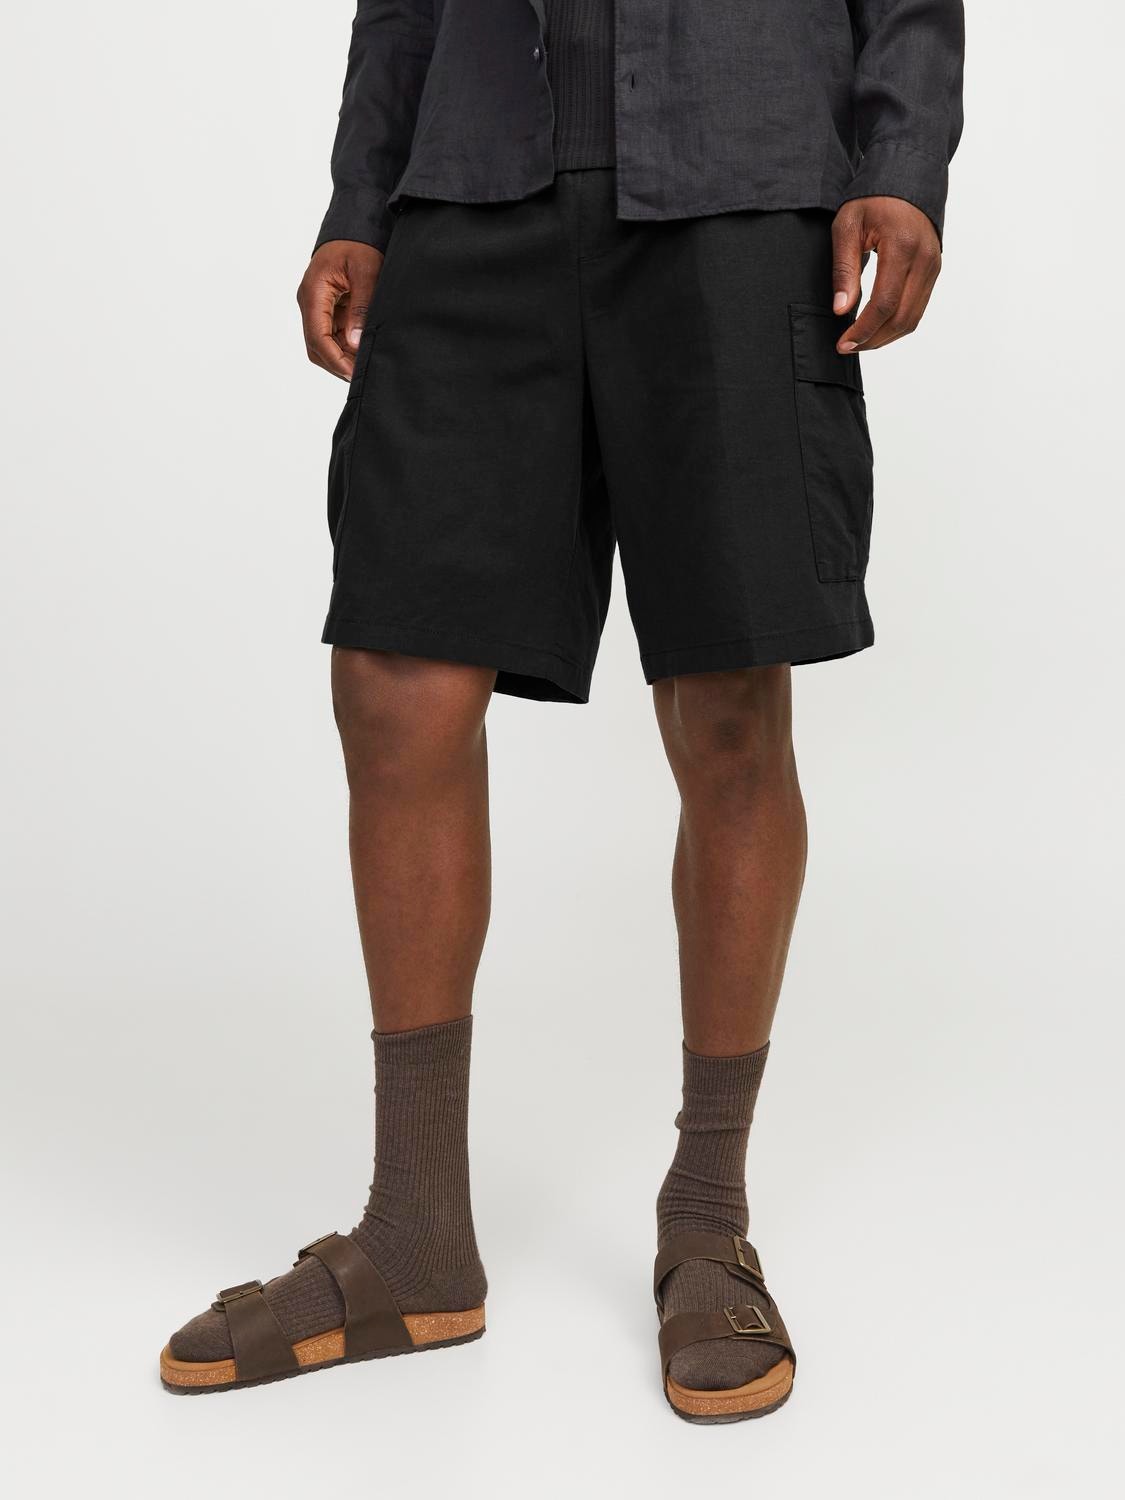 Jack & Jones Loose Fit Shorts -Black - 12268319